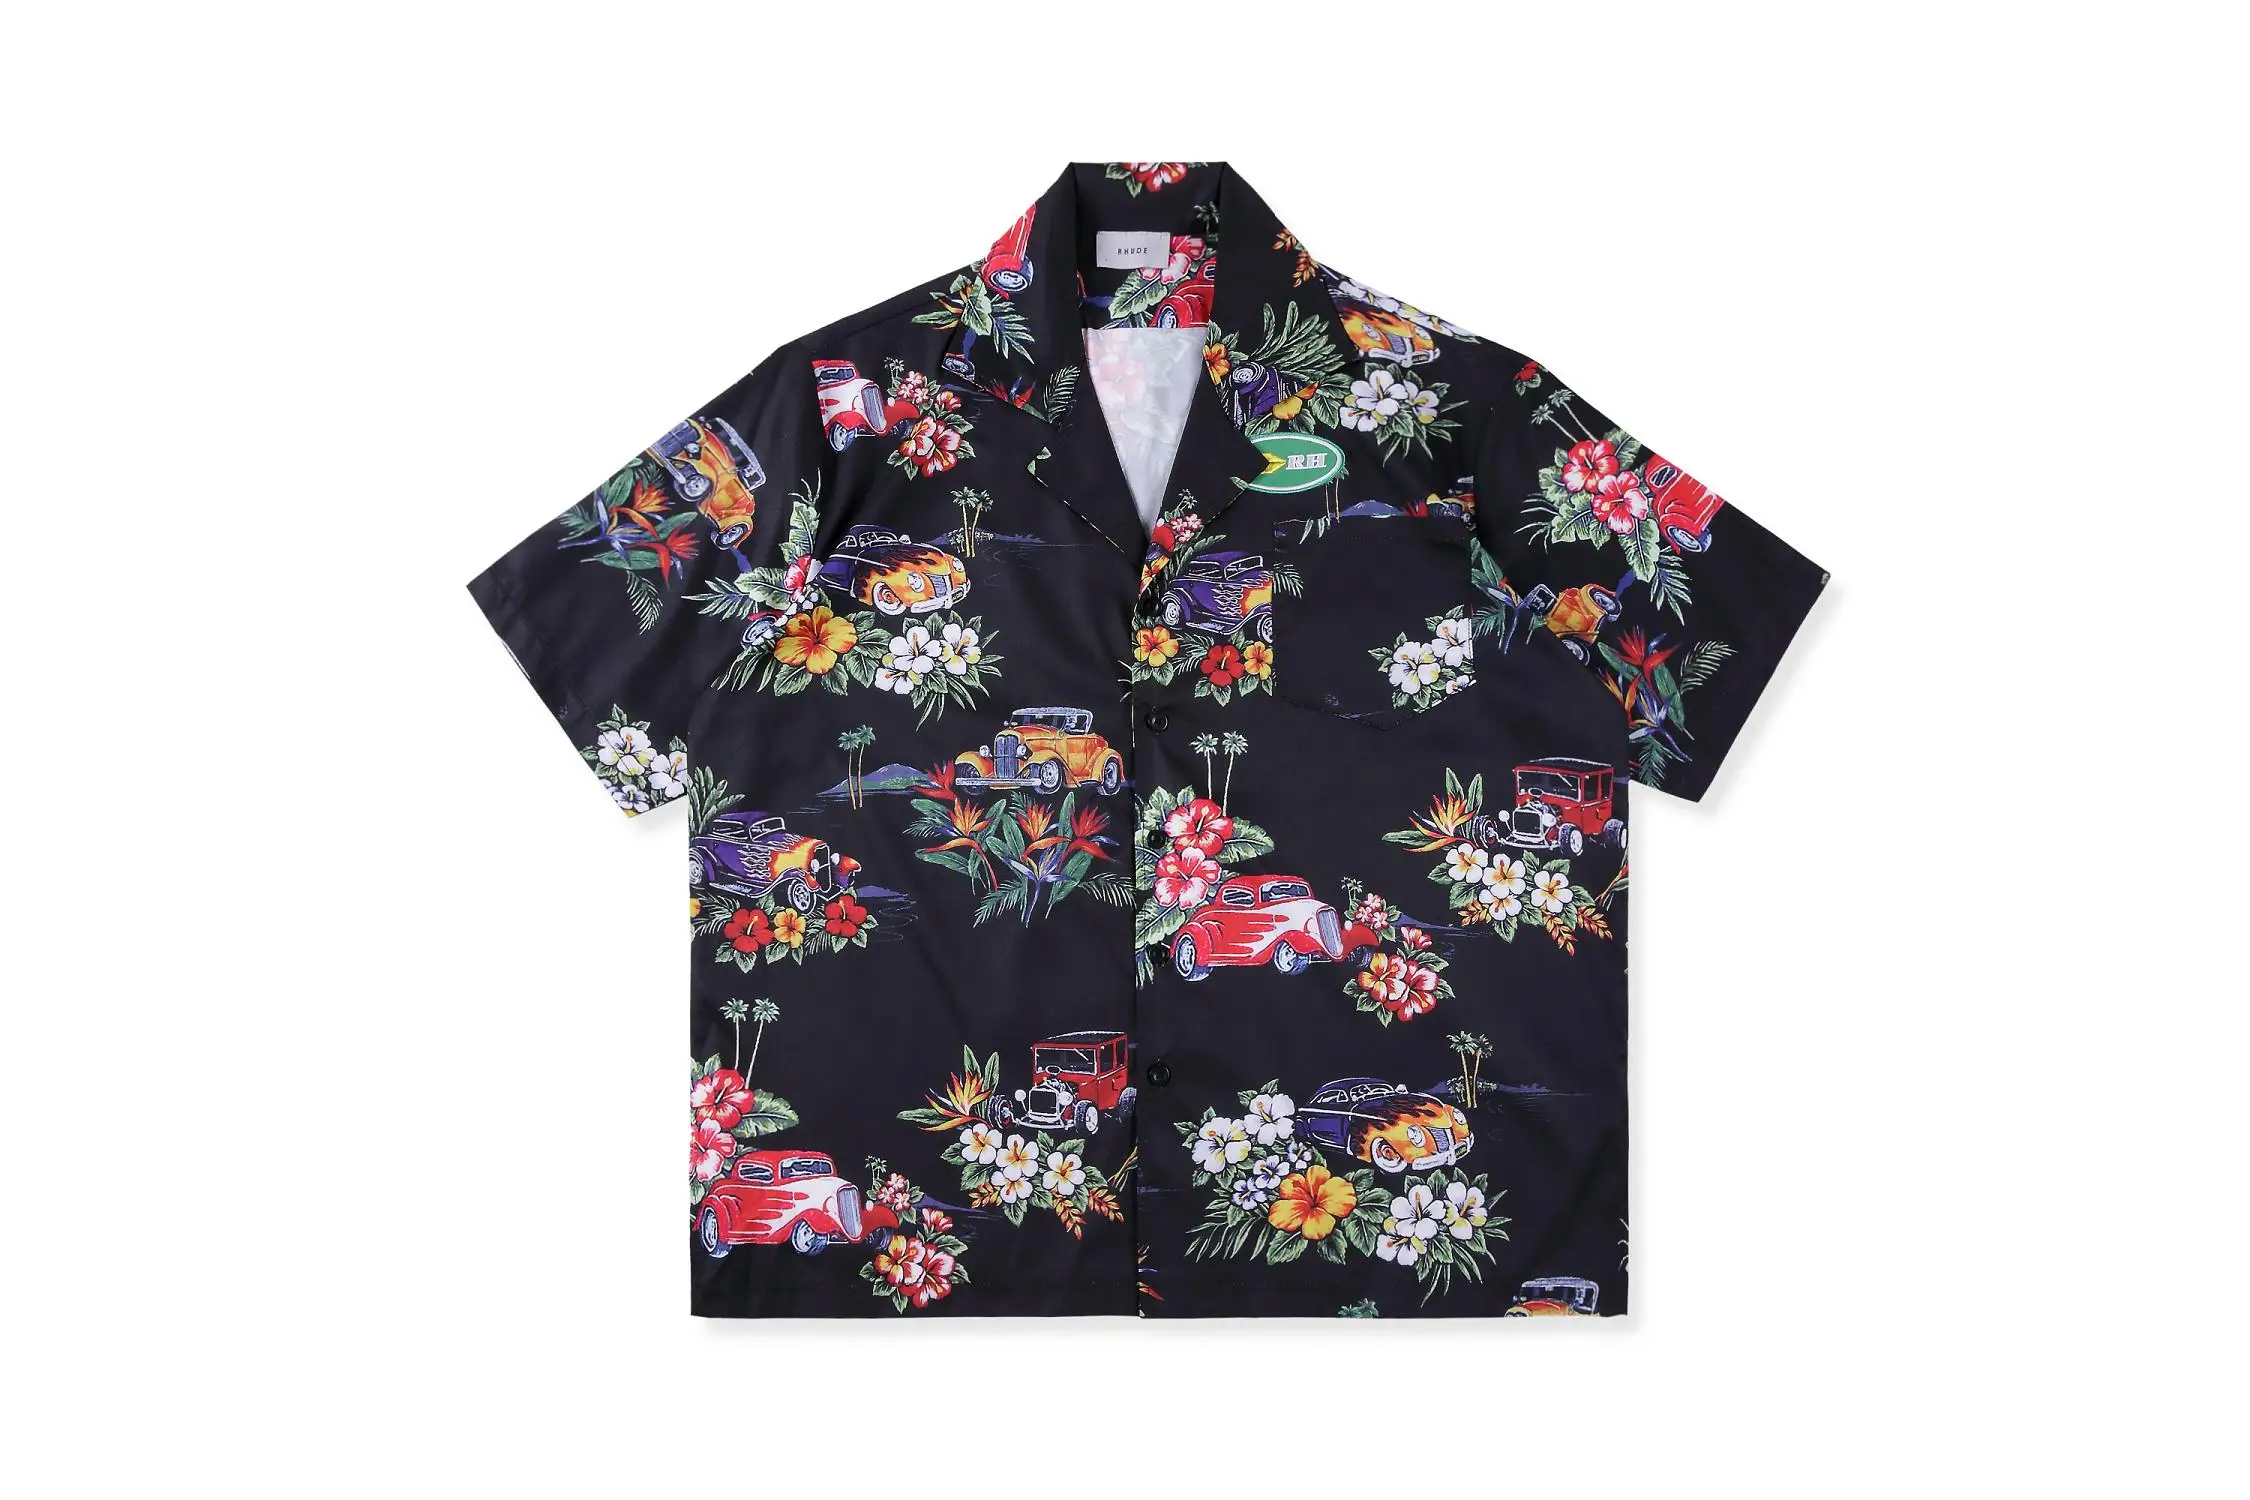 19SS гавайская рубашка RHUDE 1:1 Топ Версия RHUDE футболка для мужчин и женщин уличная хип-хоп Повседневная рубашка с коротким рукавом